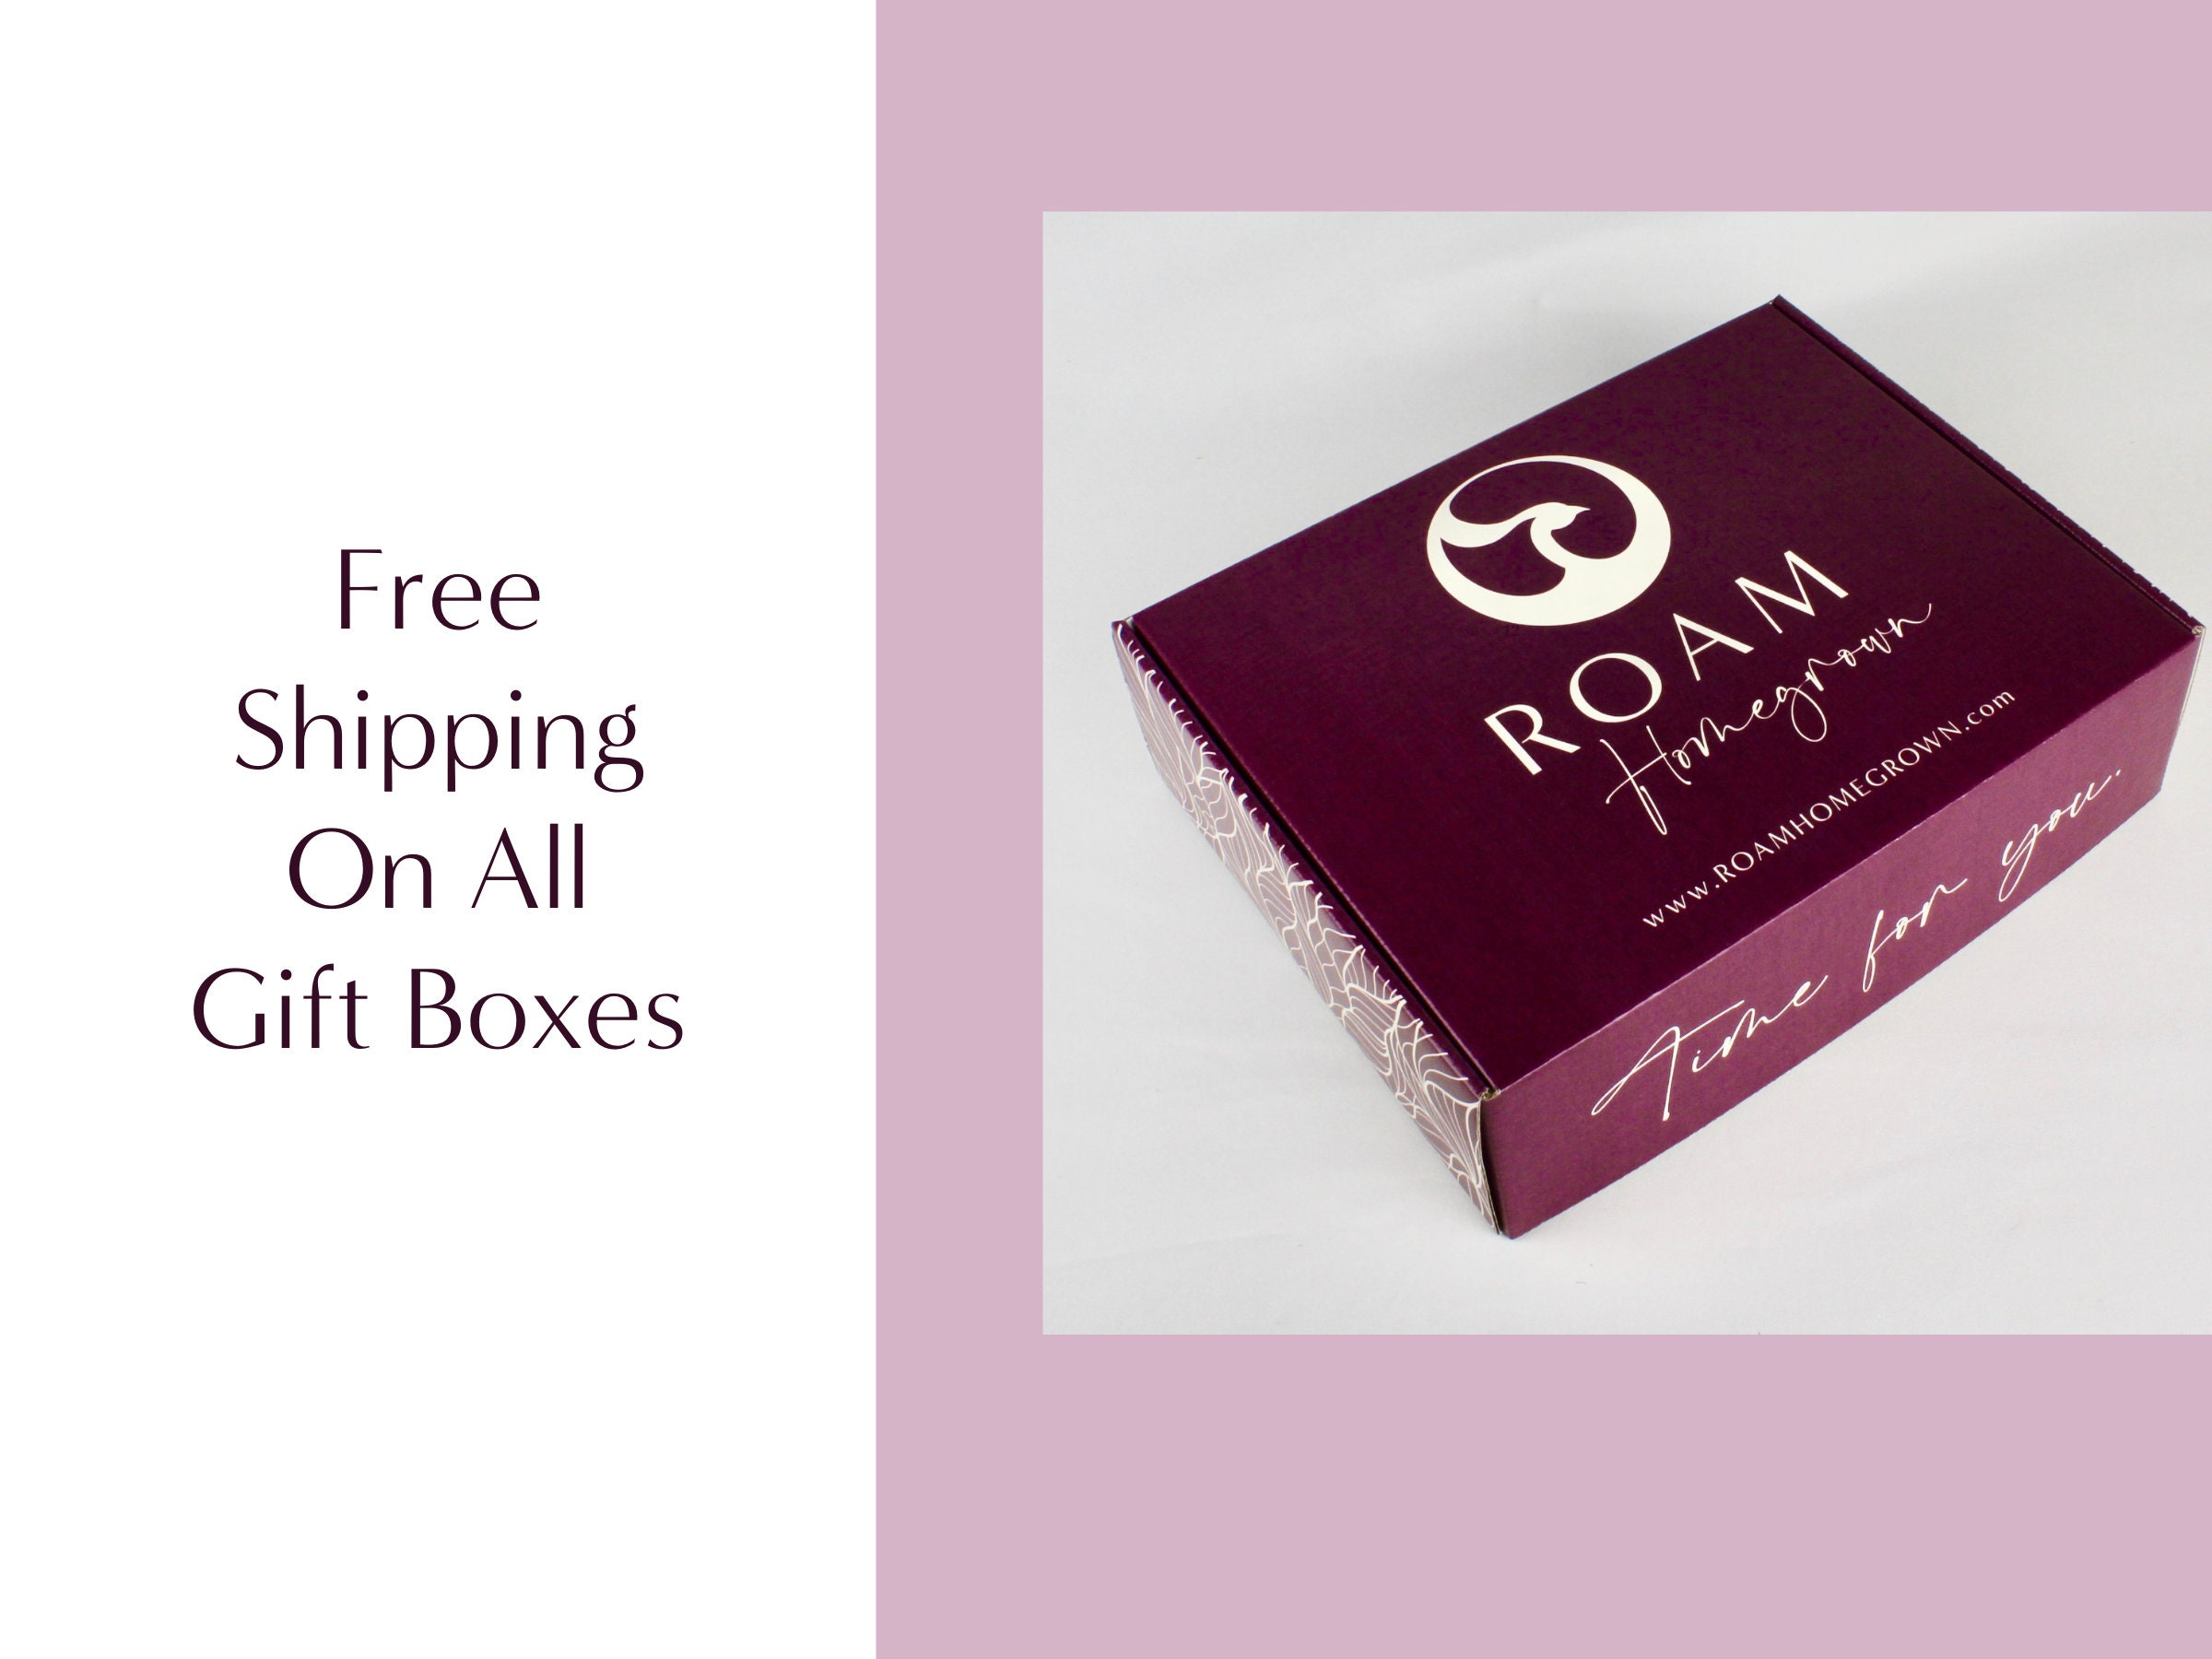 Personalized party box in bulk 8x8x4 Happy birthday gift box giftbox perfect gift box for birthday presents make someone feel happy